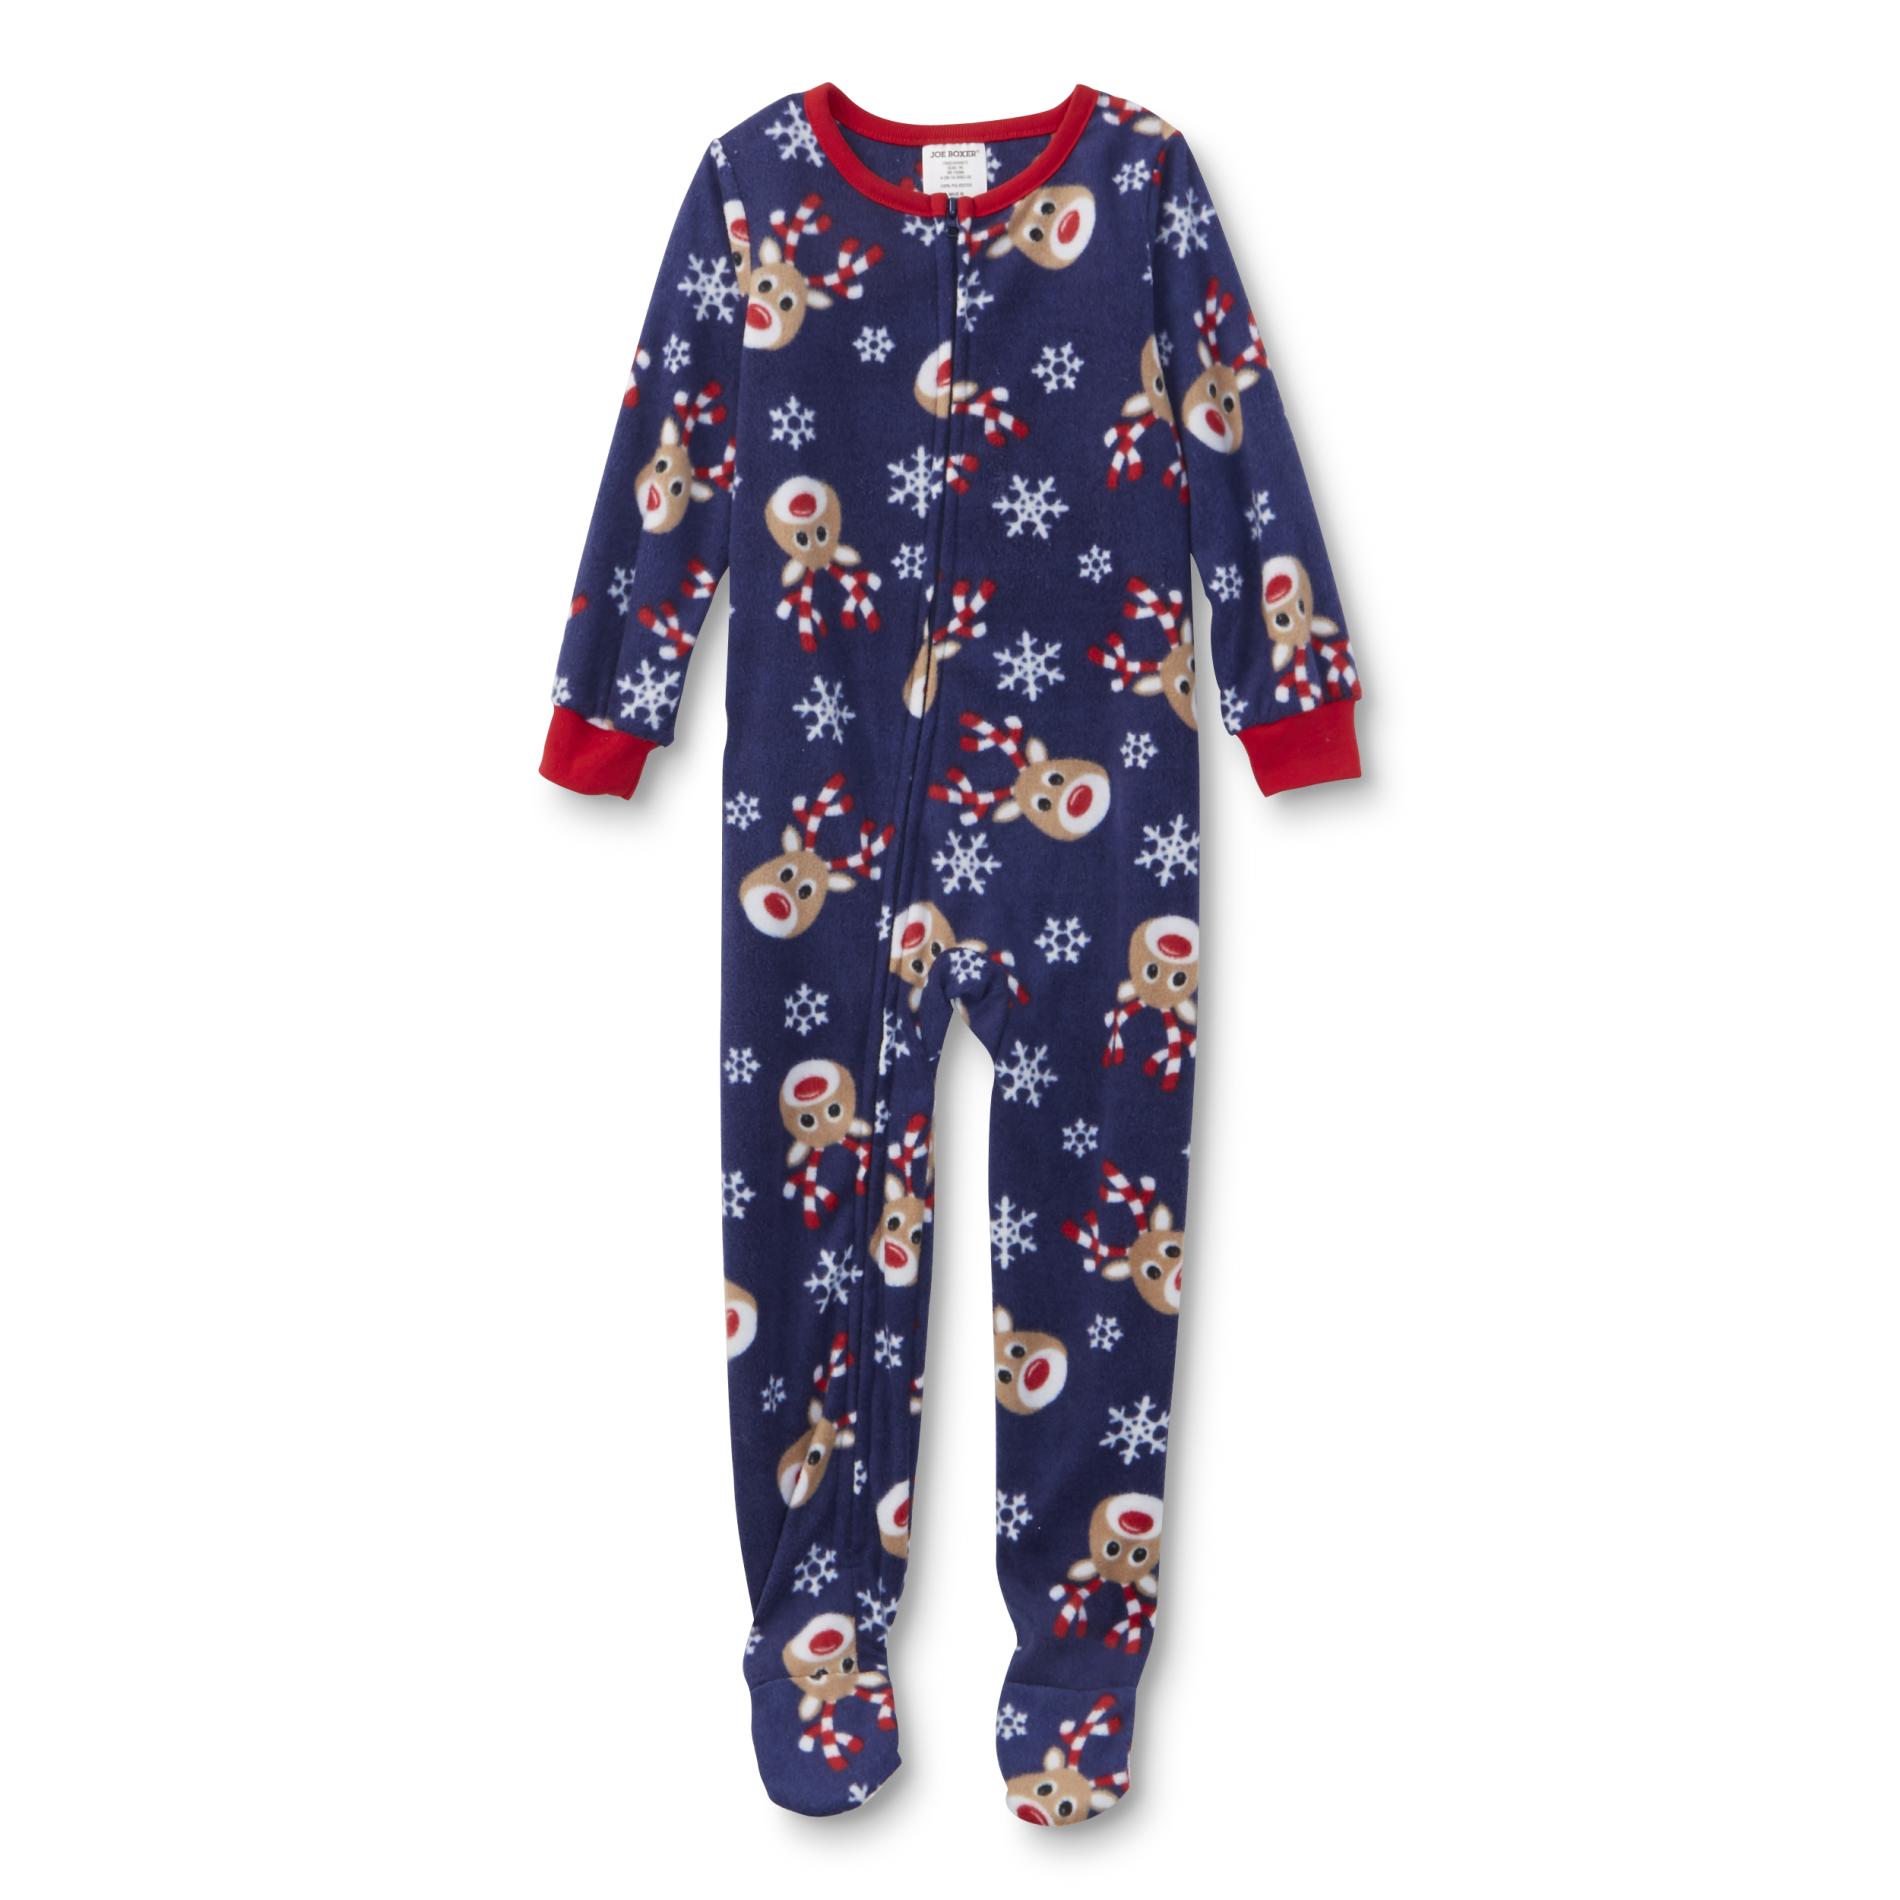 Joe Boxer Infant & Toddler's Christmas Sleeper Pajamas - Reindeer